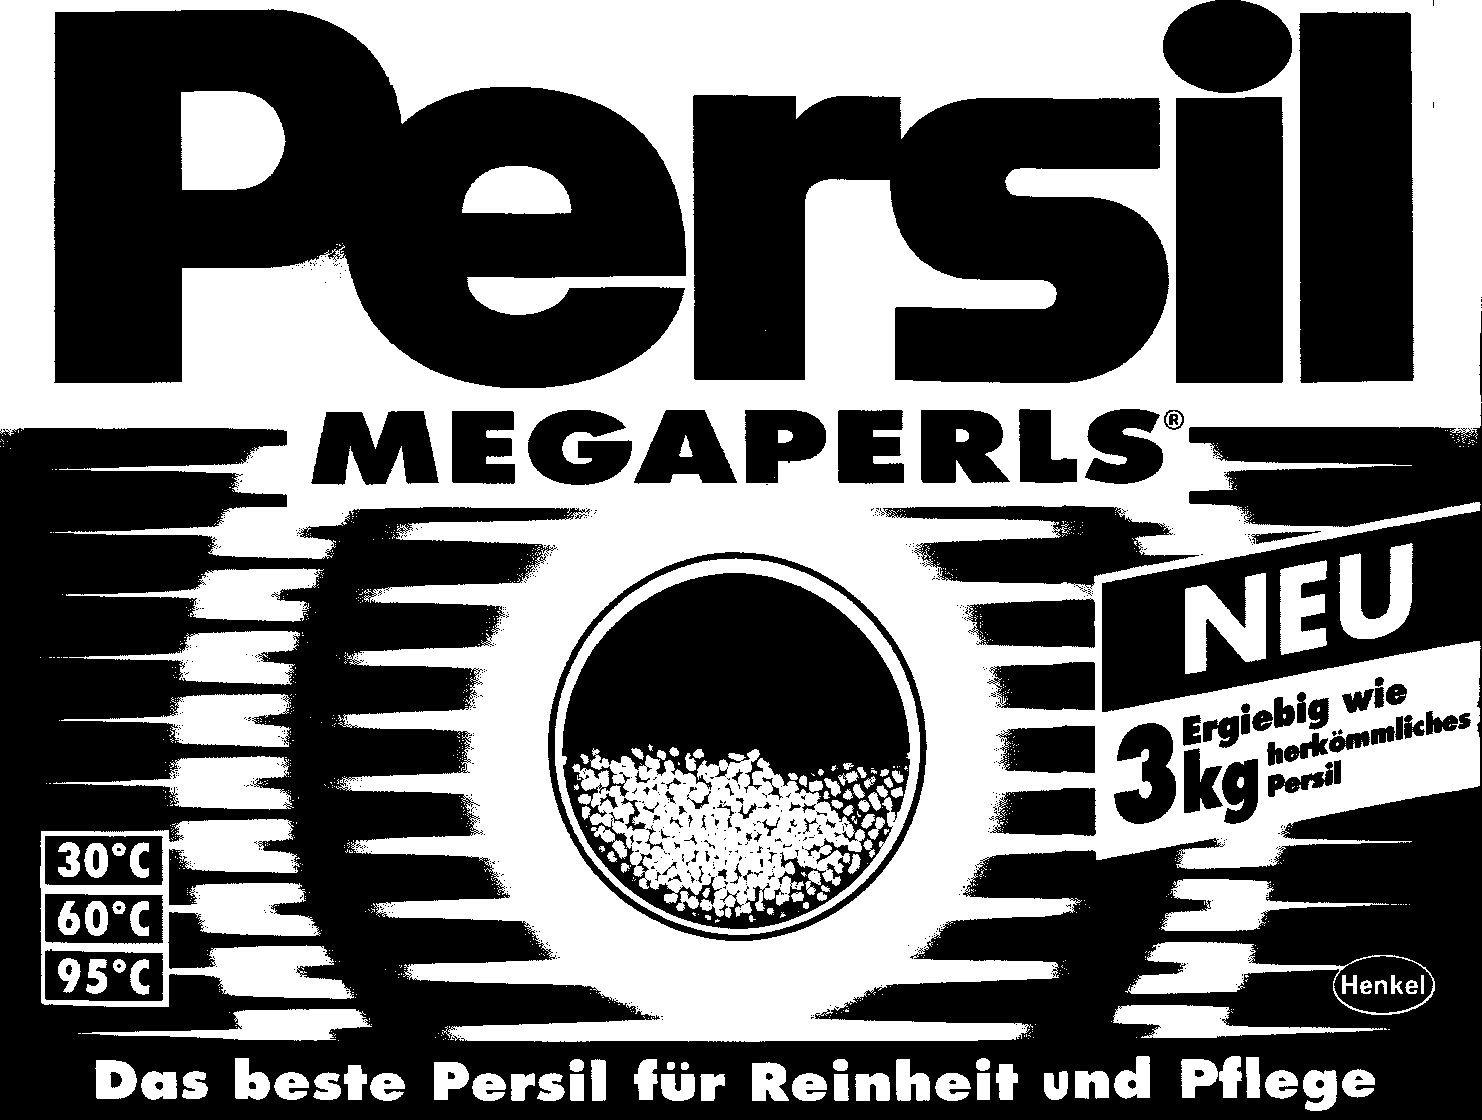 Source Persil Megaperls